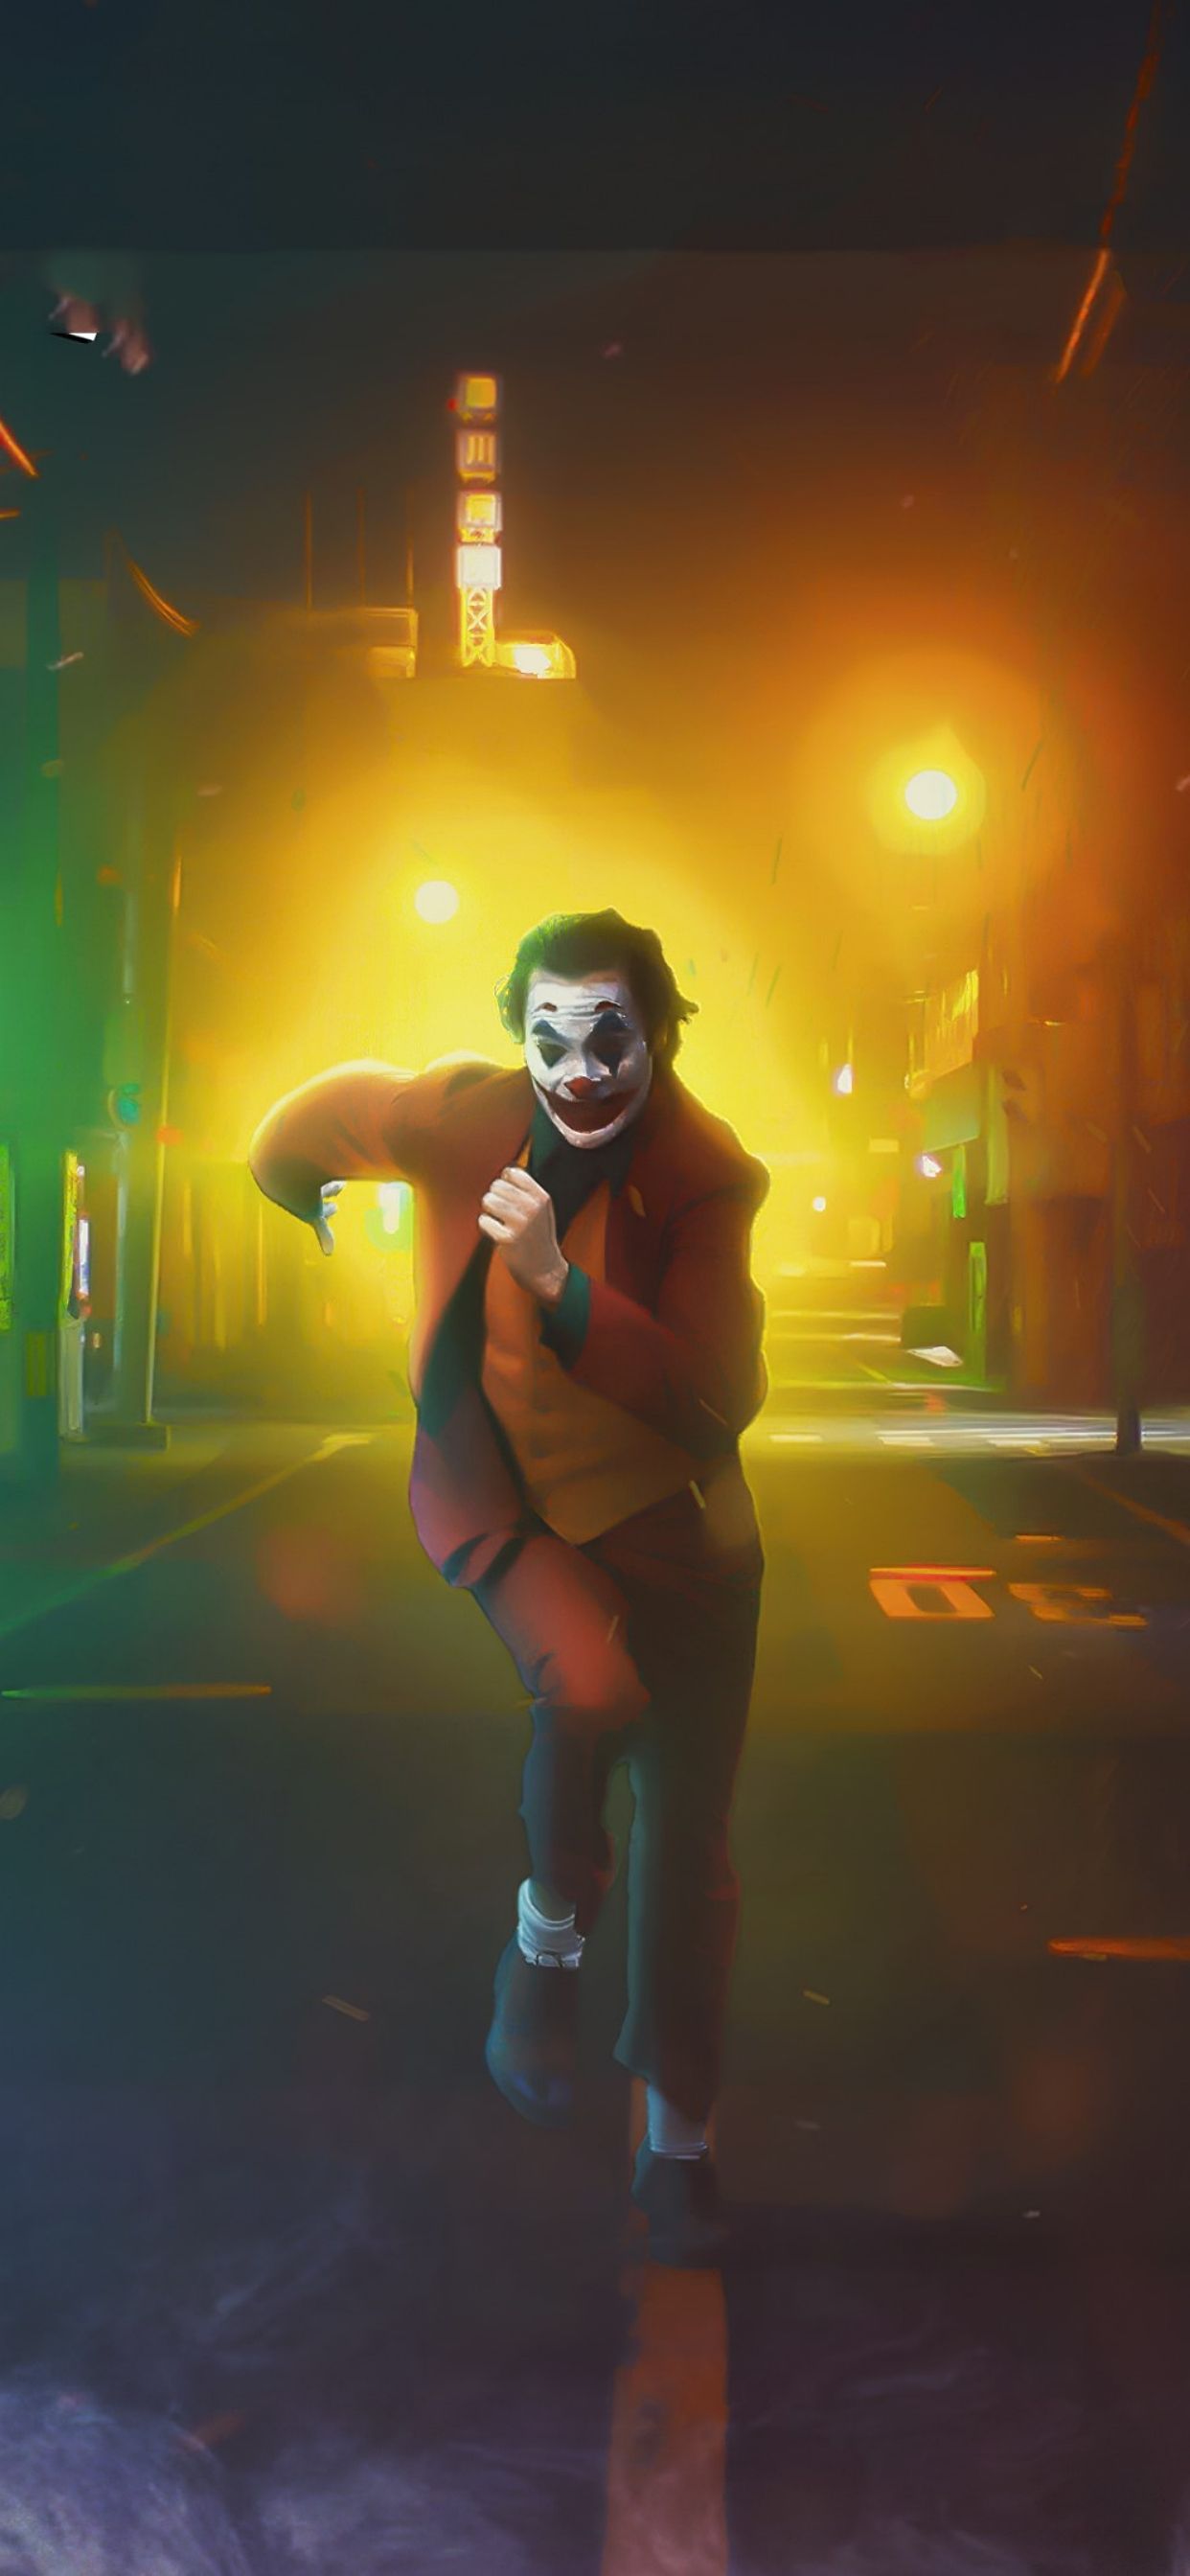 Joker iphone wallpaper